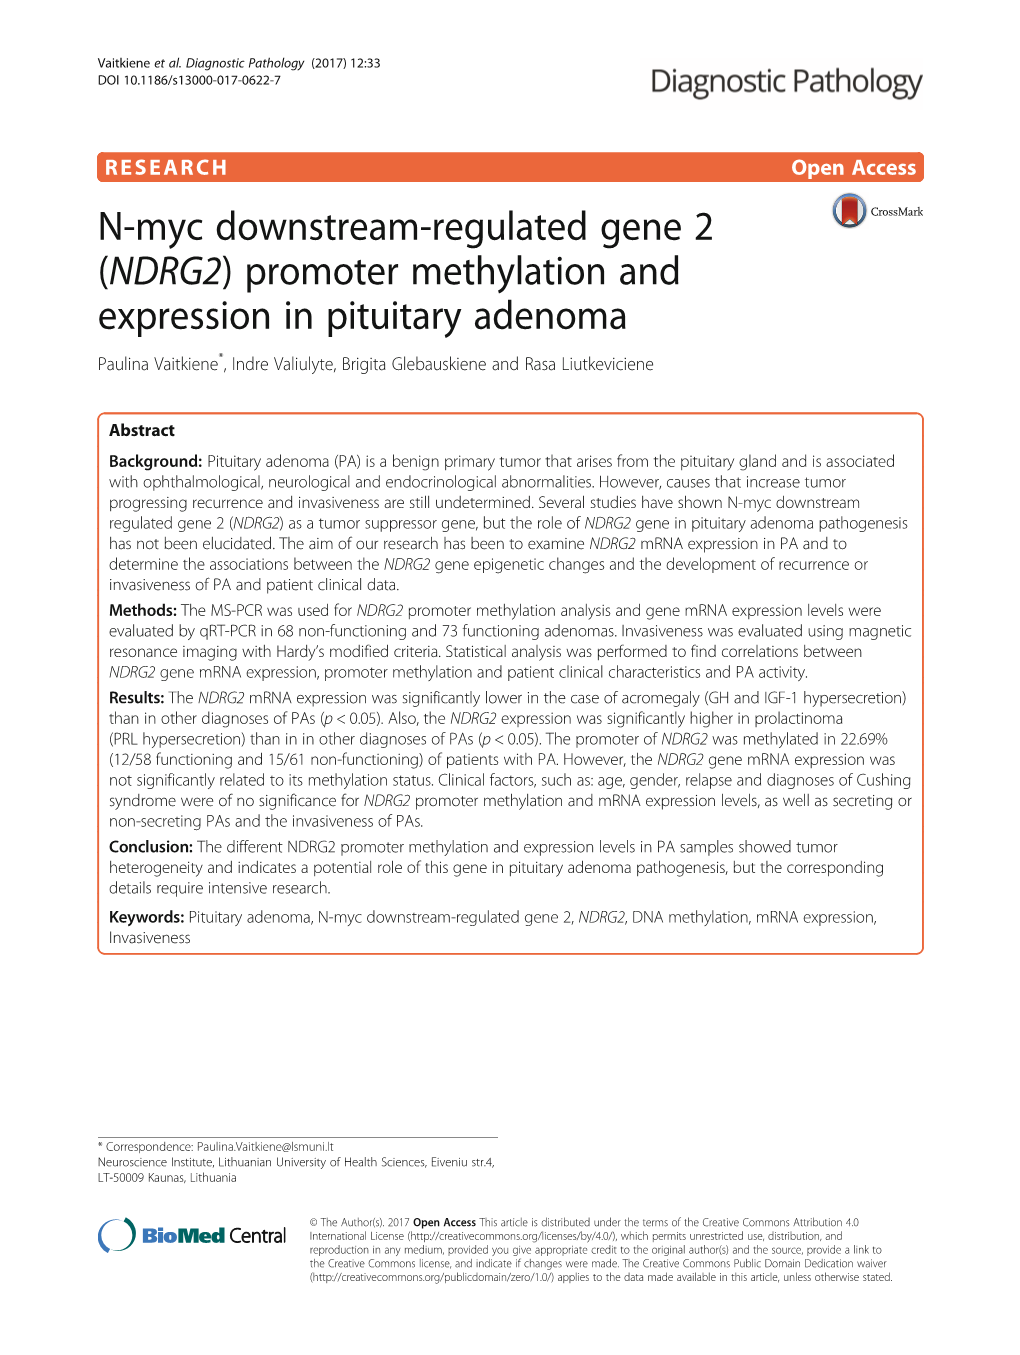 N-Myc Downstream-Regulated Gene 2 (NDRG2) Promoter Methylation And